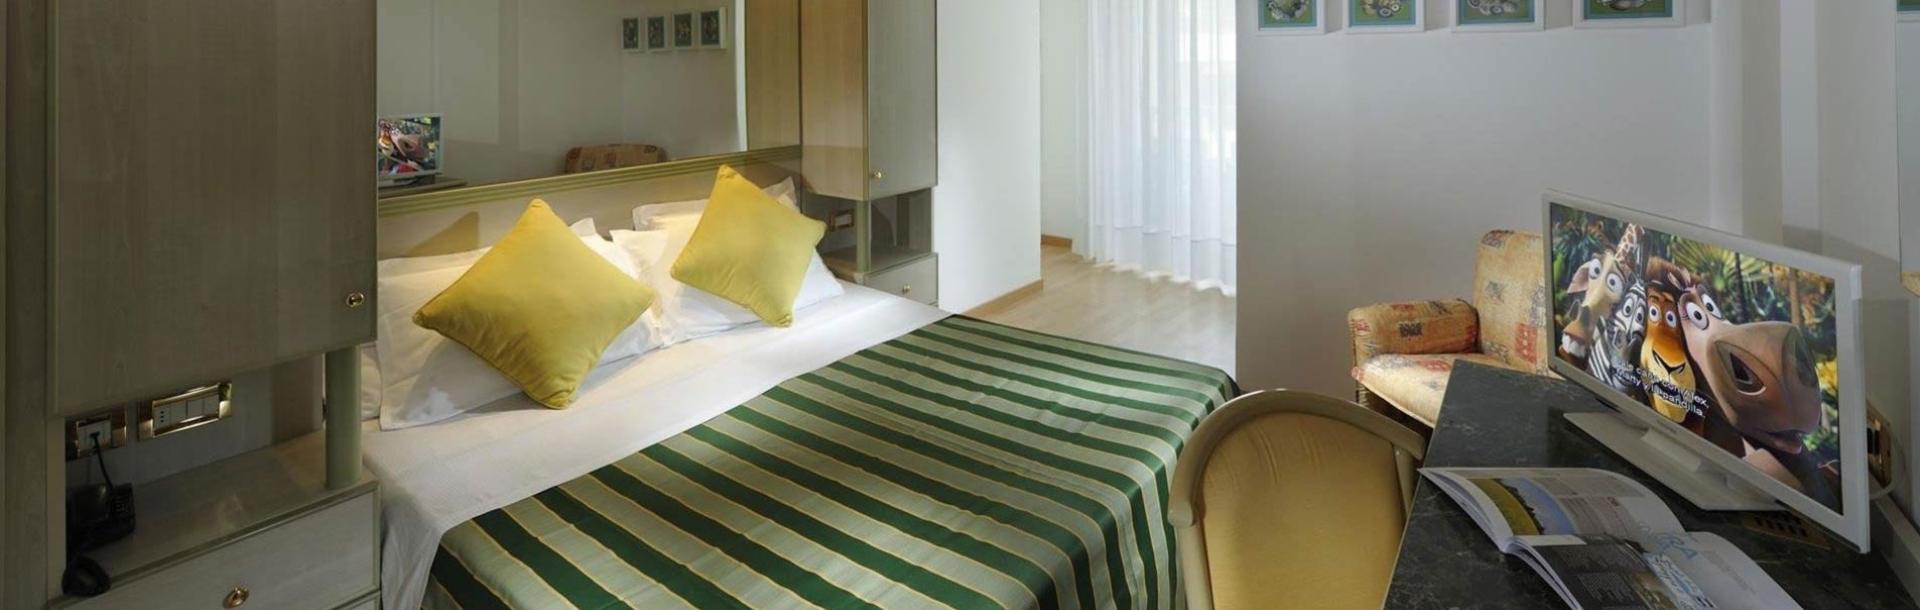 hotel-montecarlo hu egybenyilo-csaladi-szoba 013